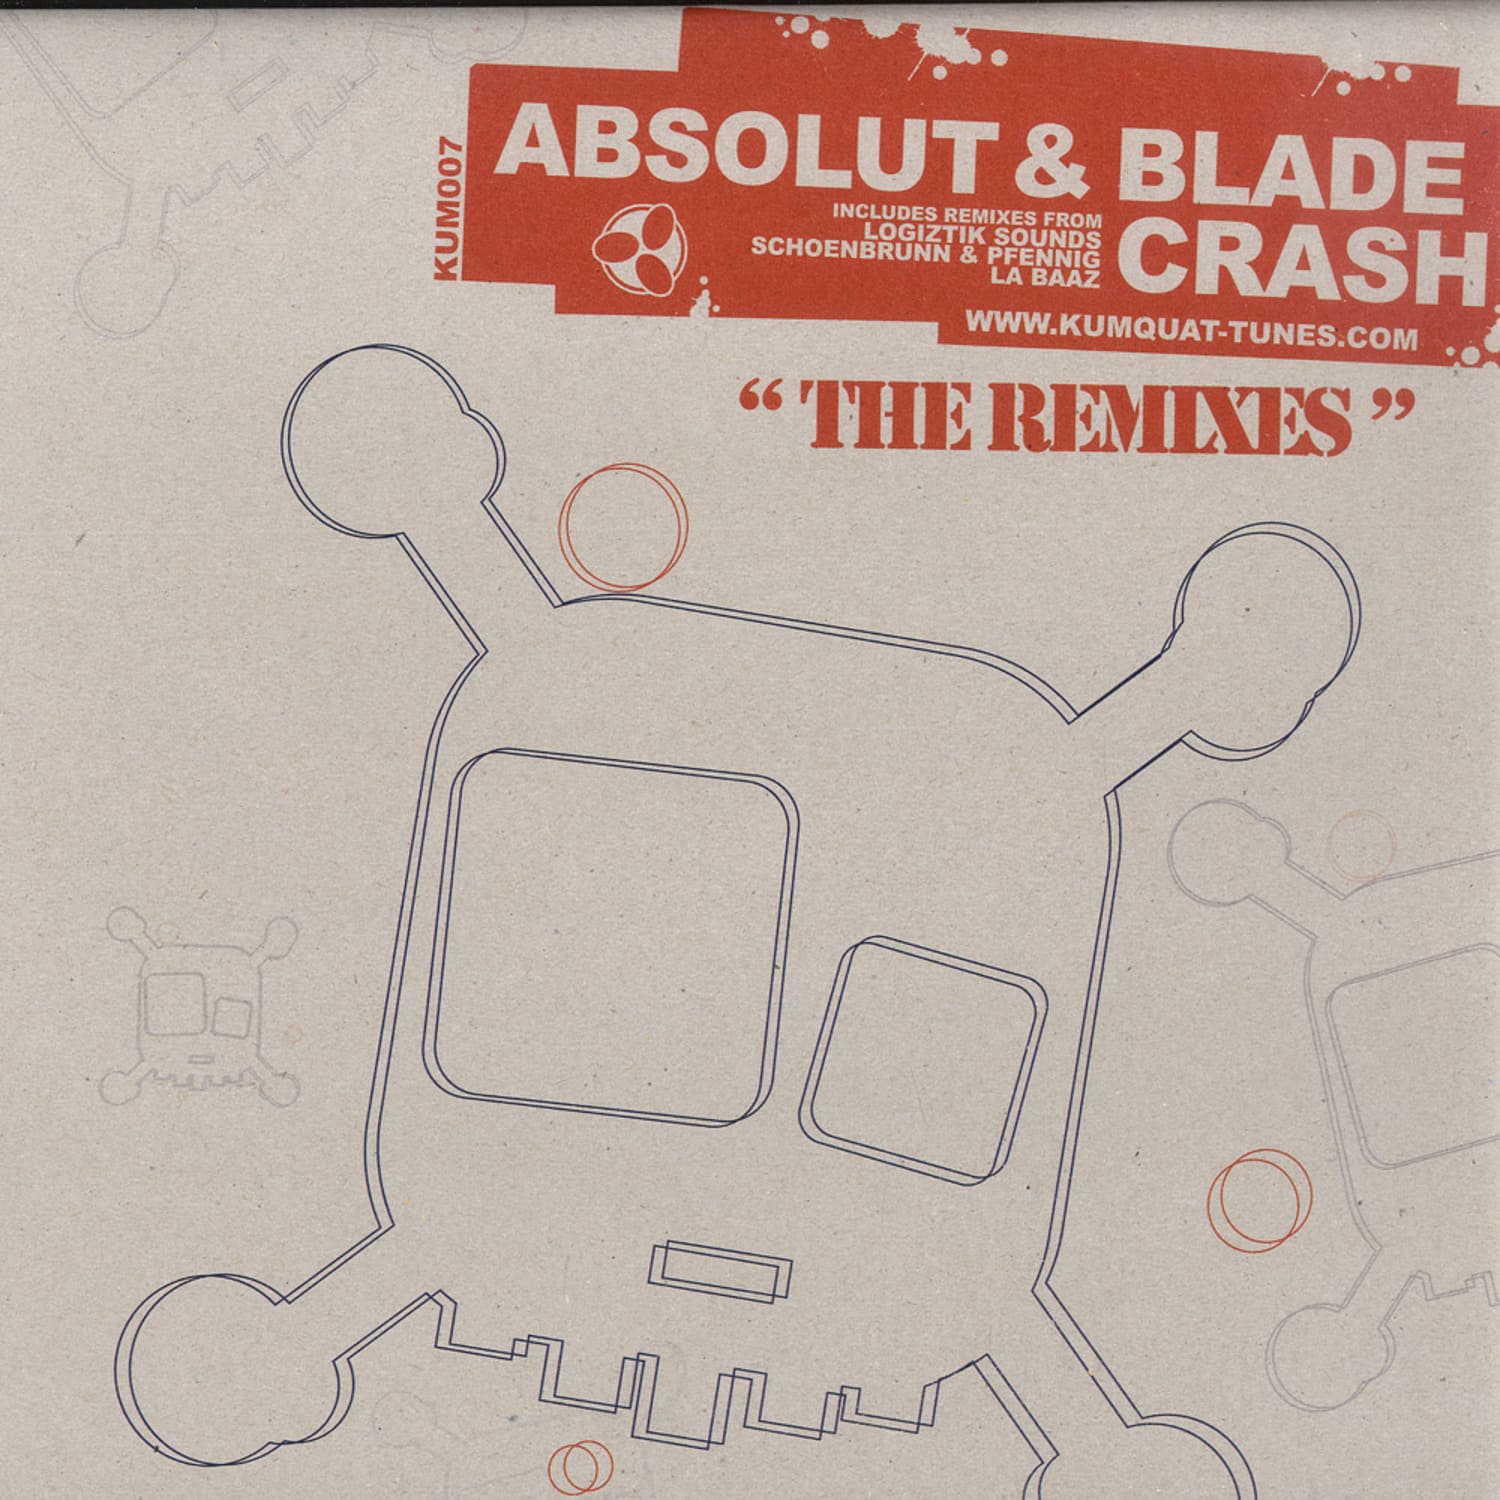 Absolut & Blade - CRASH 